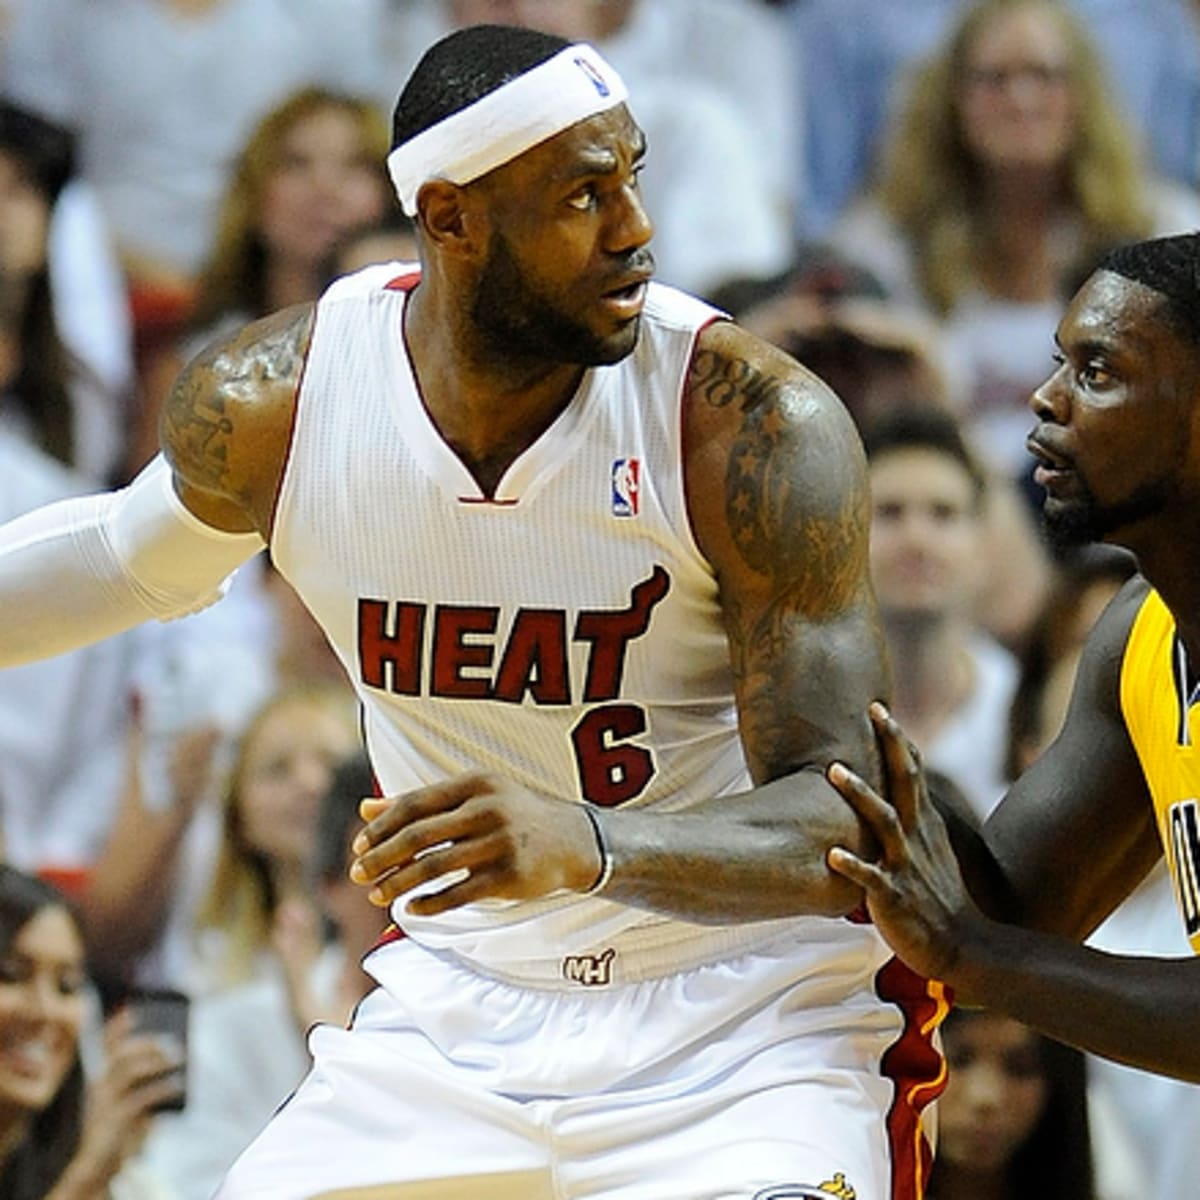 SportsPortal - The Miami Heat are expected to retire Lebron James